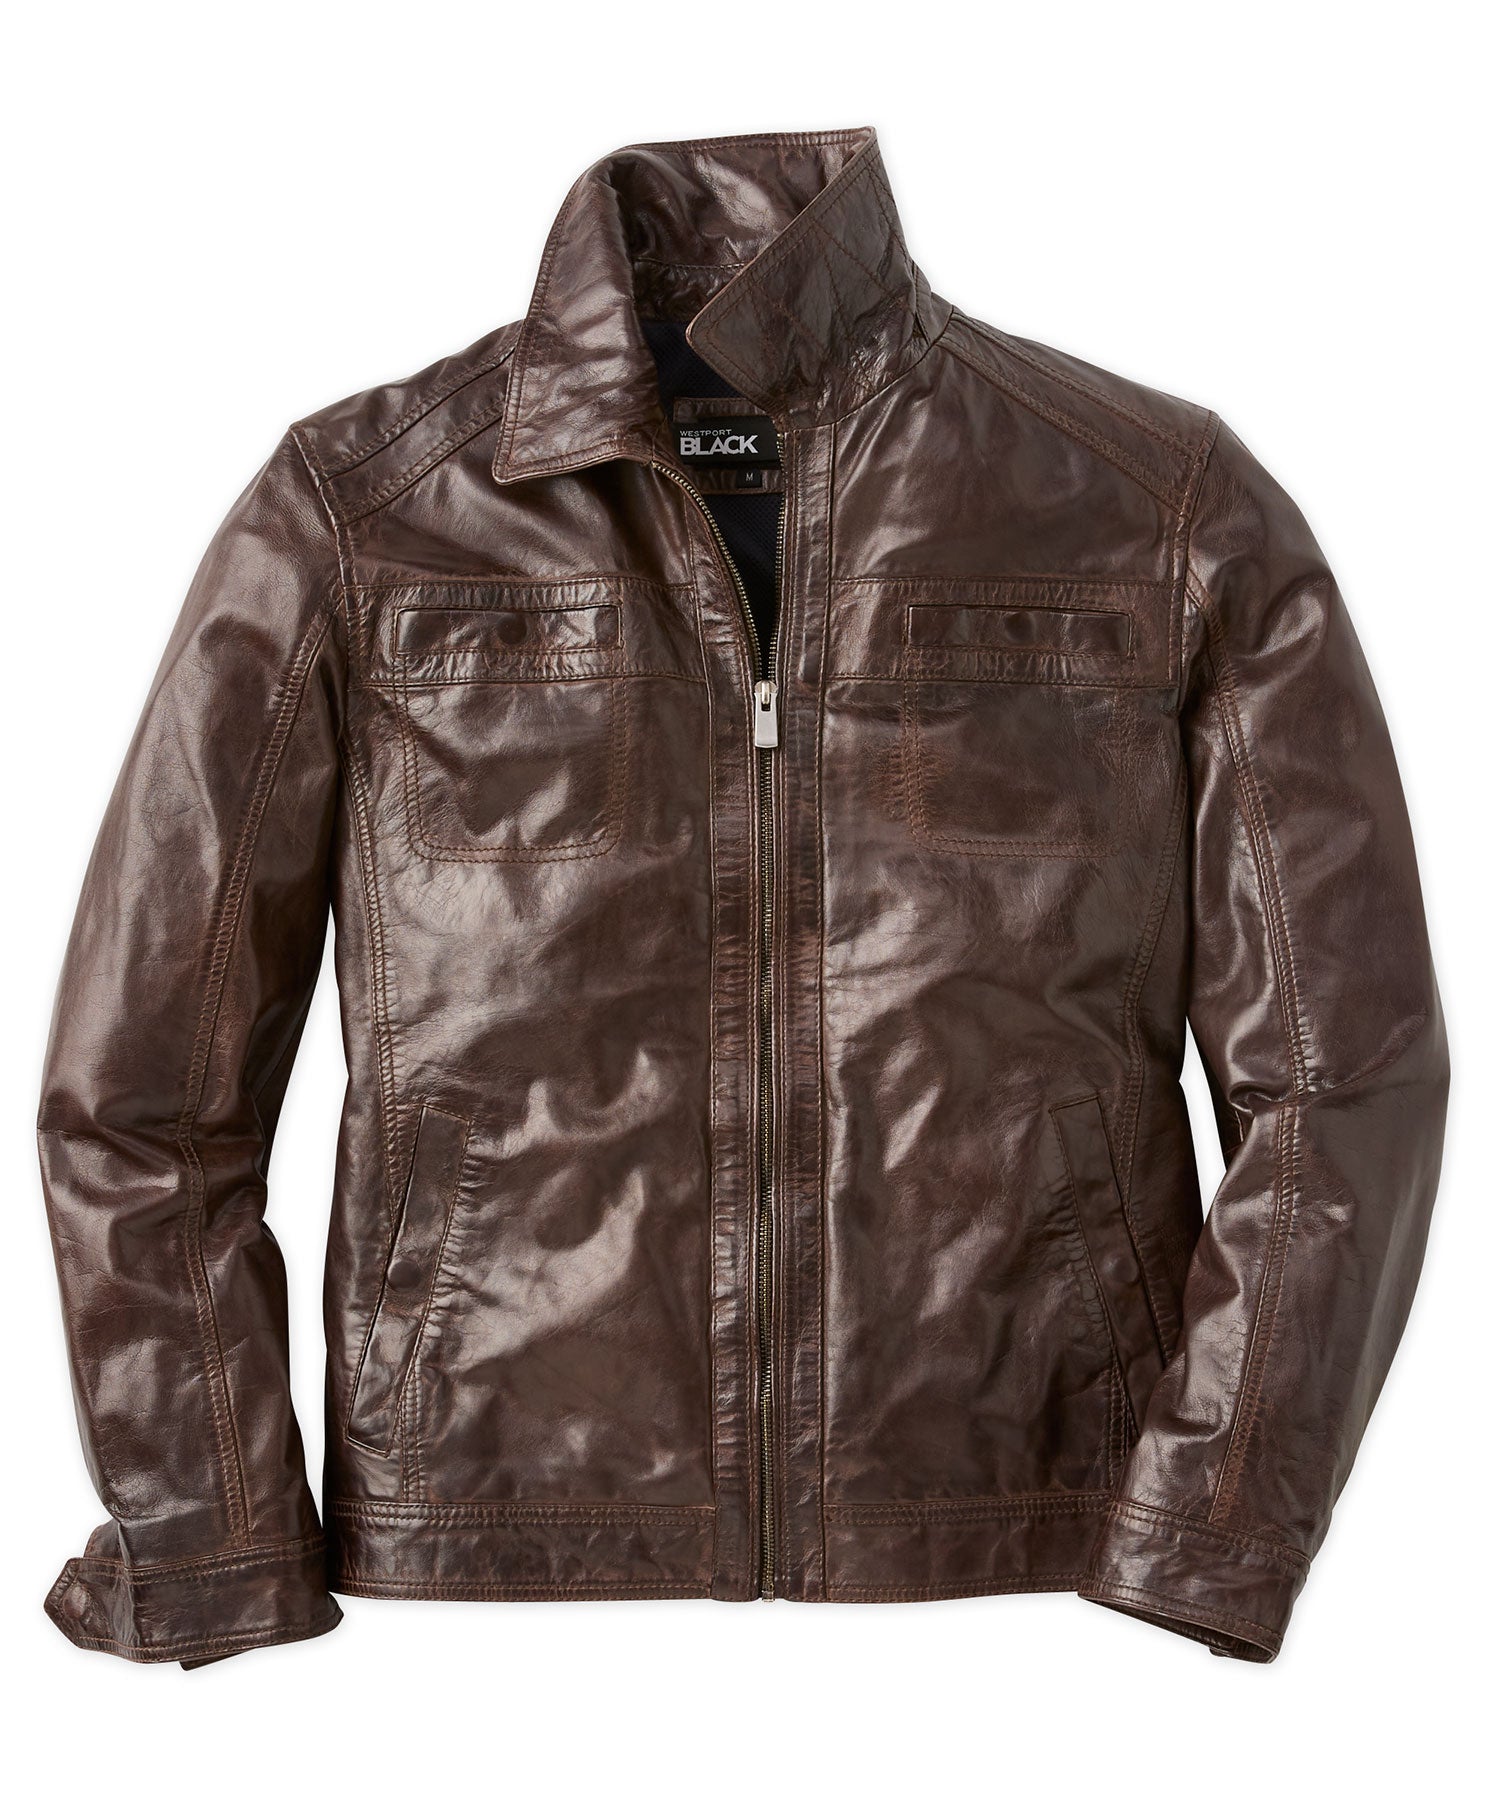 Westport Black Premium Leather Jacket, Men's Big & Tall